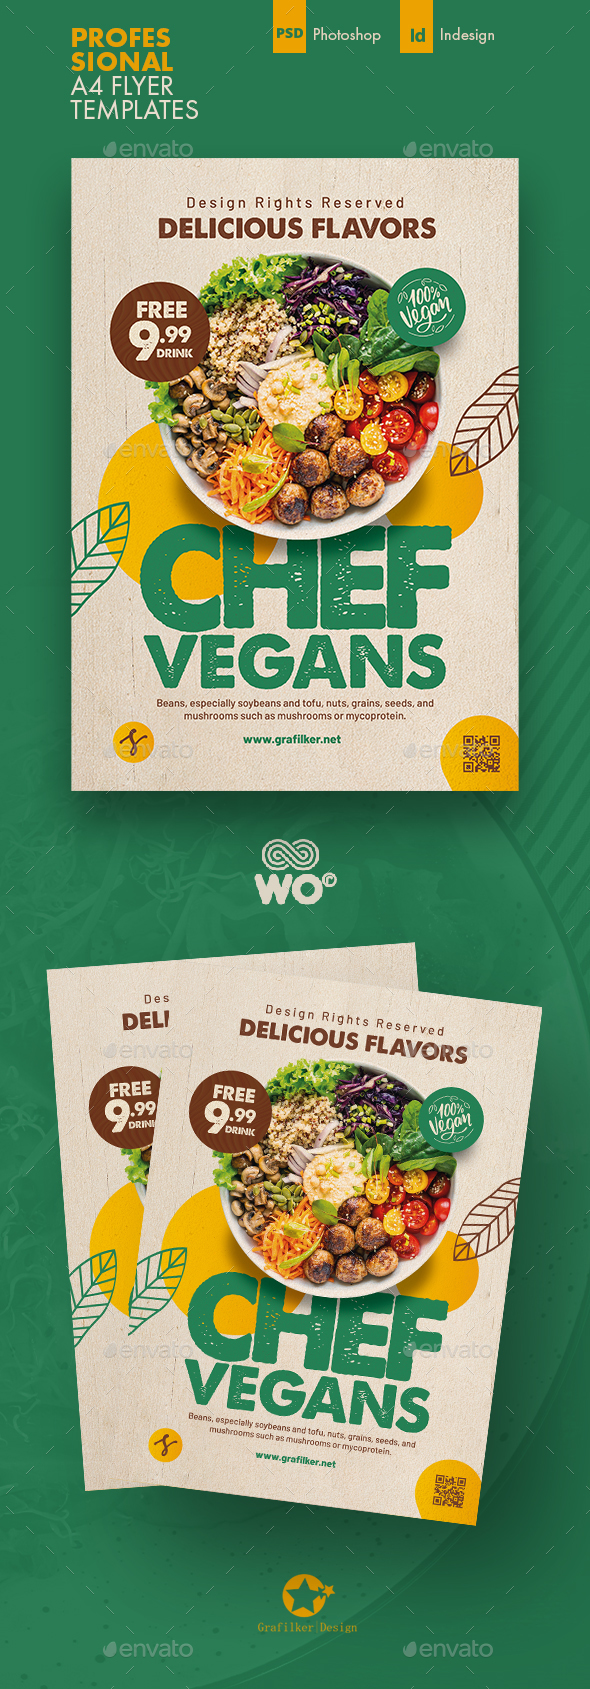 Vegan Food Restaurant Flyer Templates